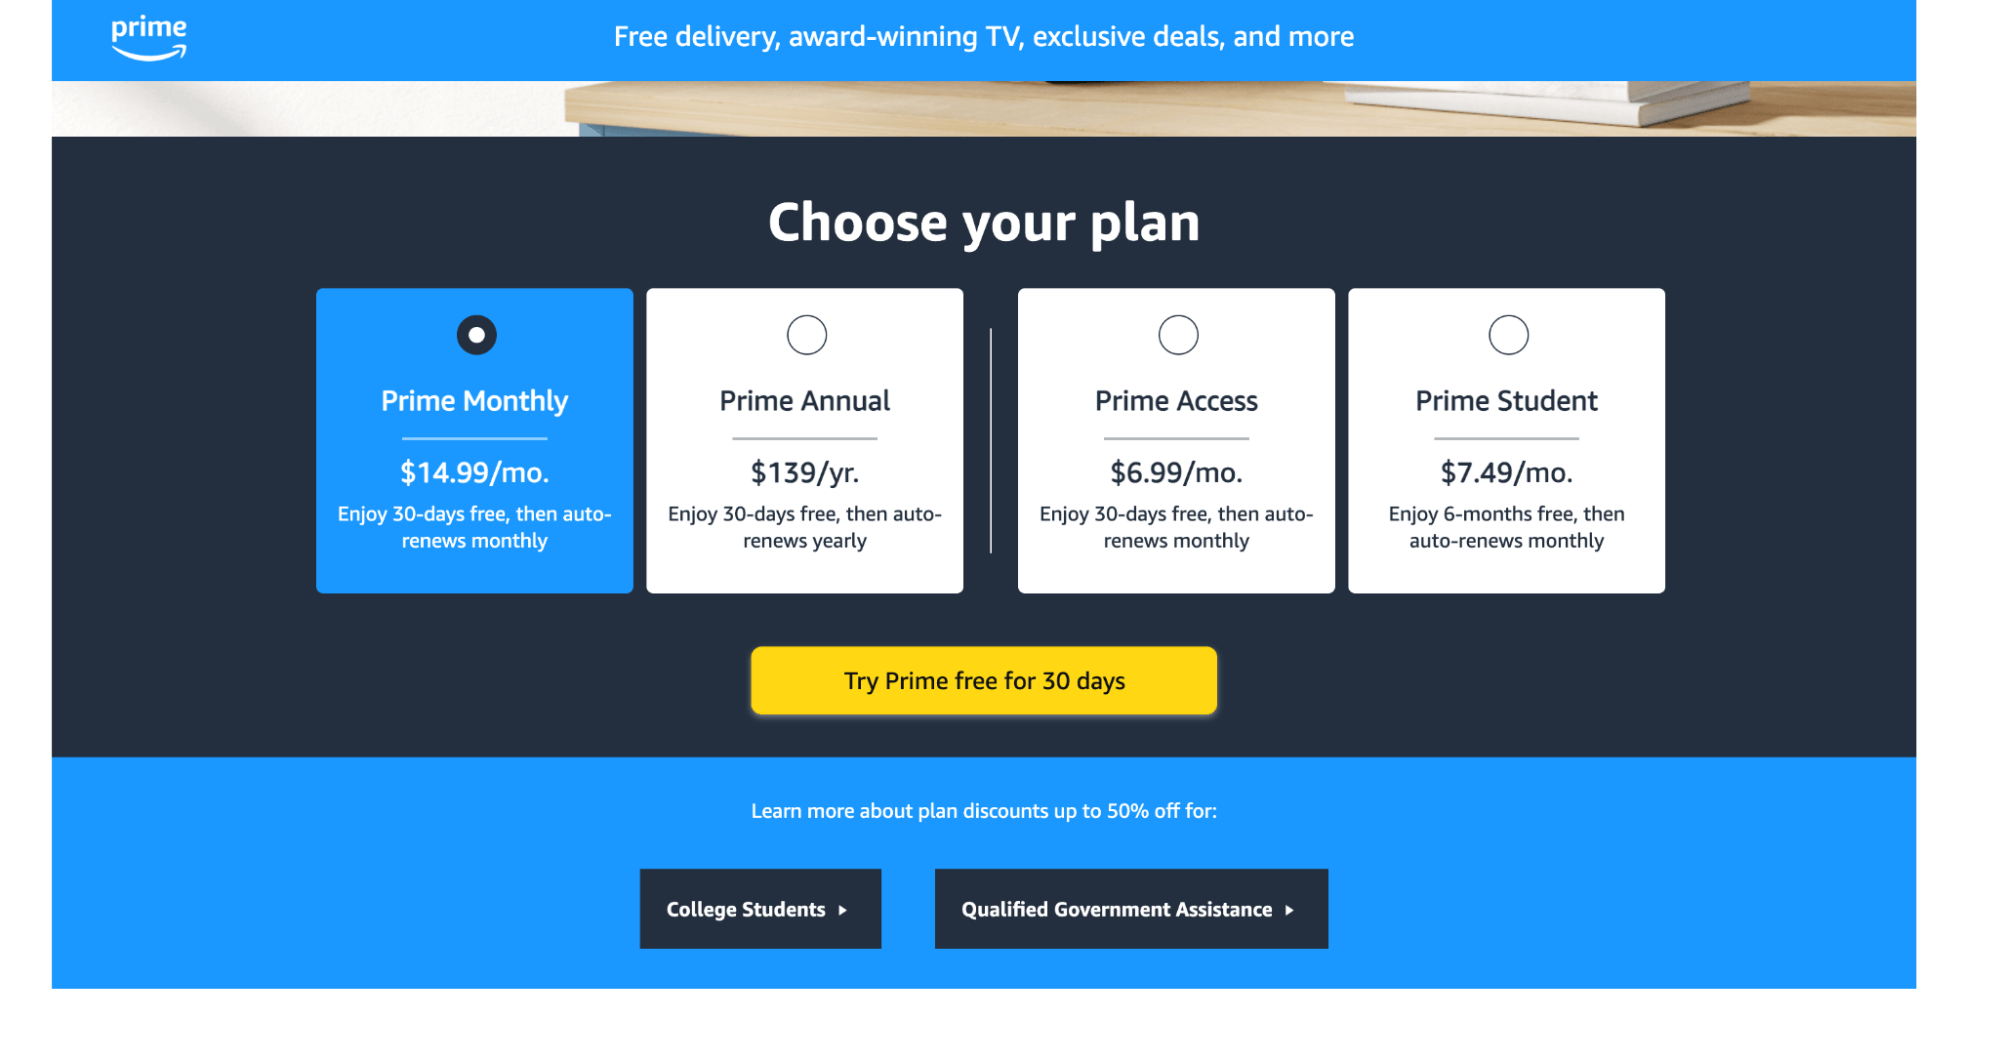 Amazon Prime pricing plan